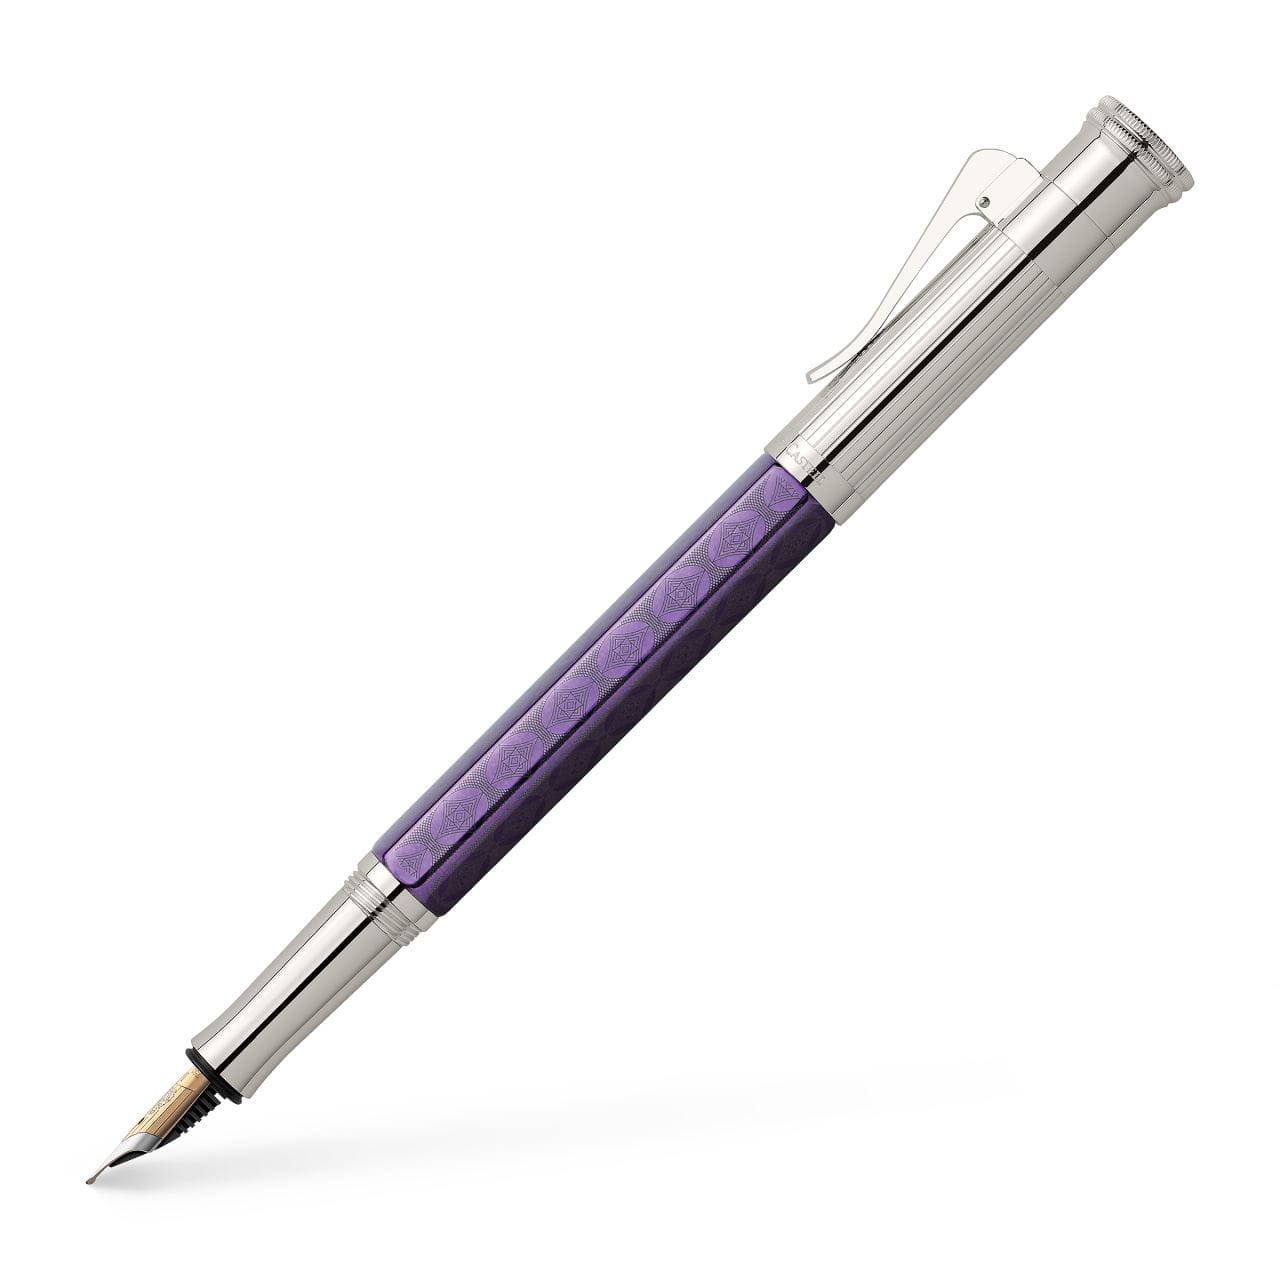 Graf-von-Faber-Castell - Fountain pen Limited Edition Heritage Ottilie - Broad